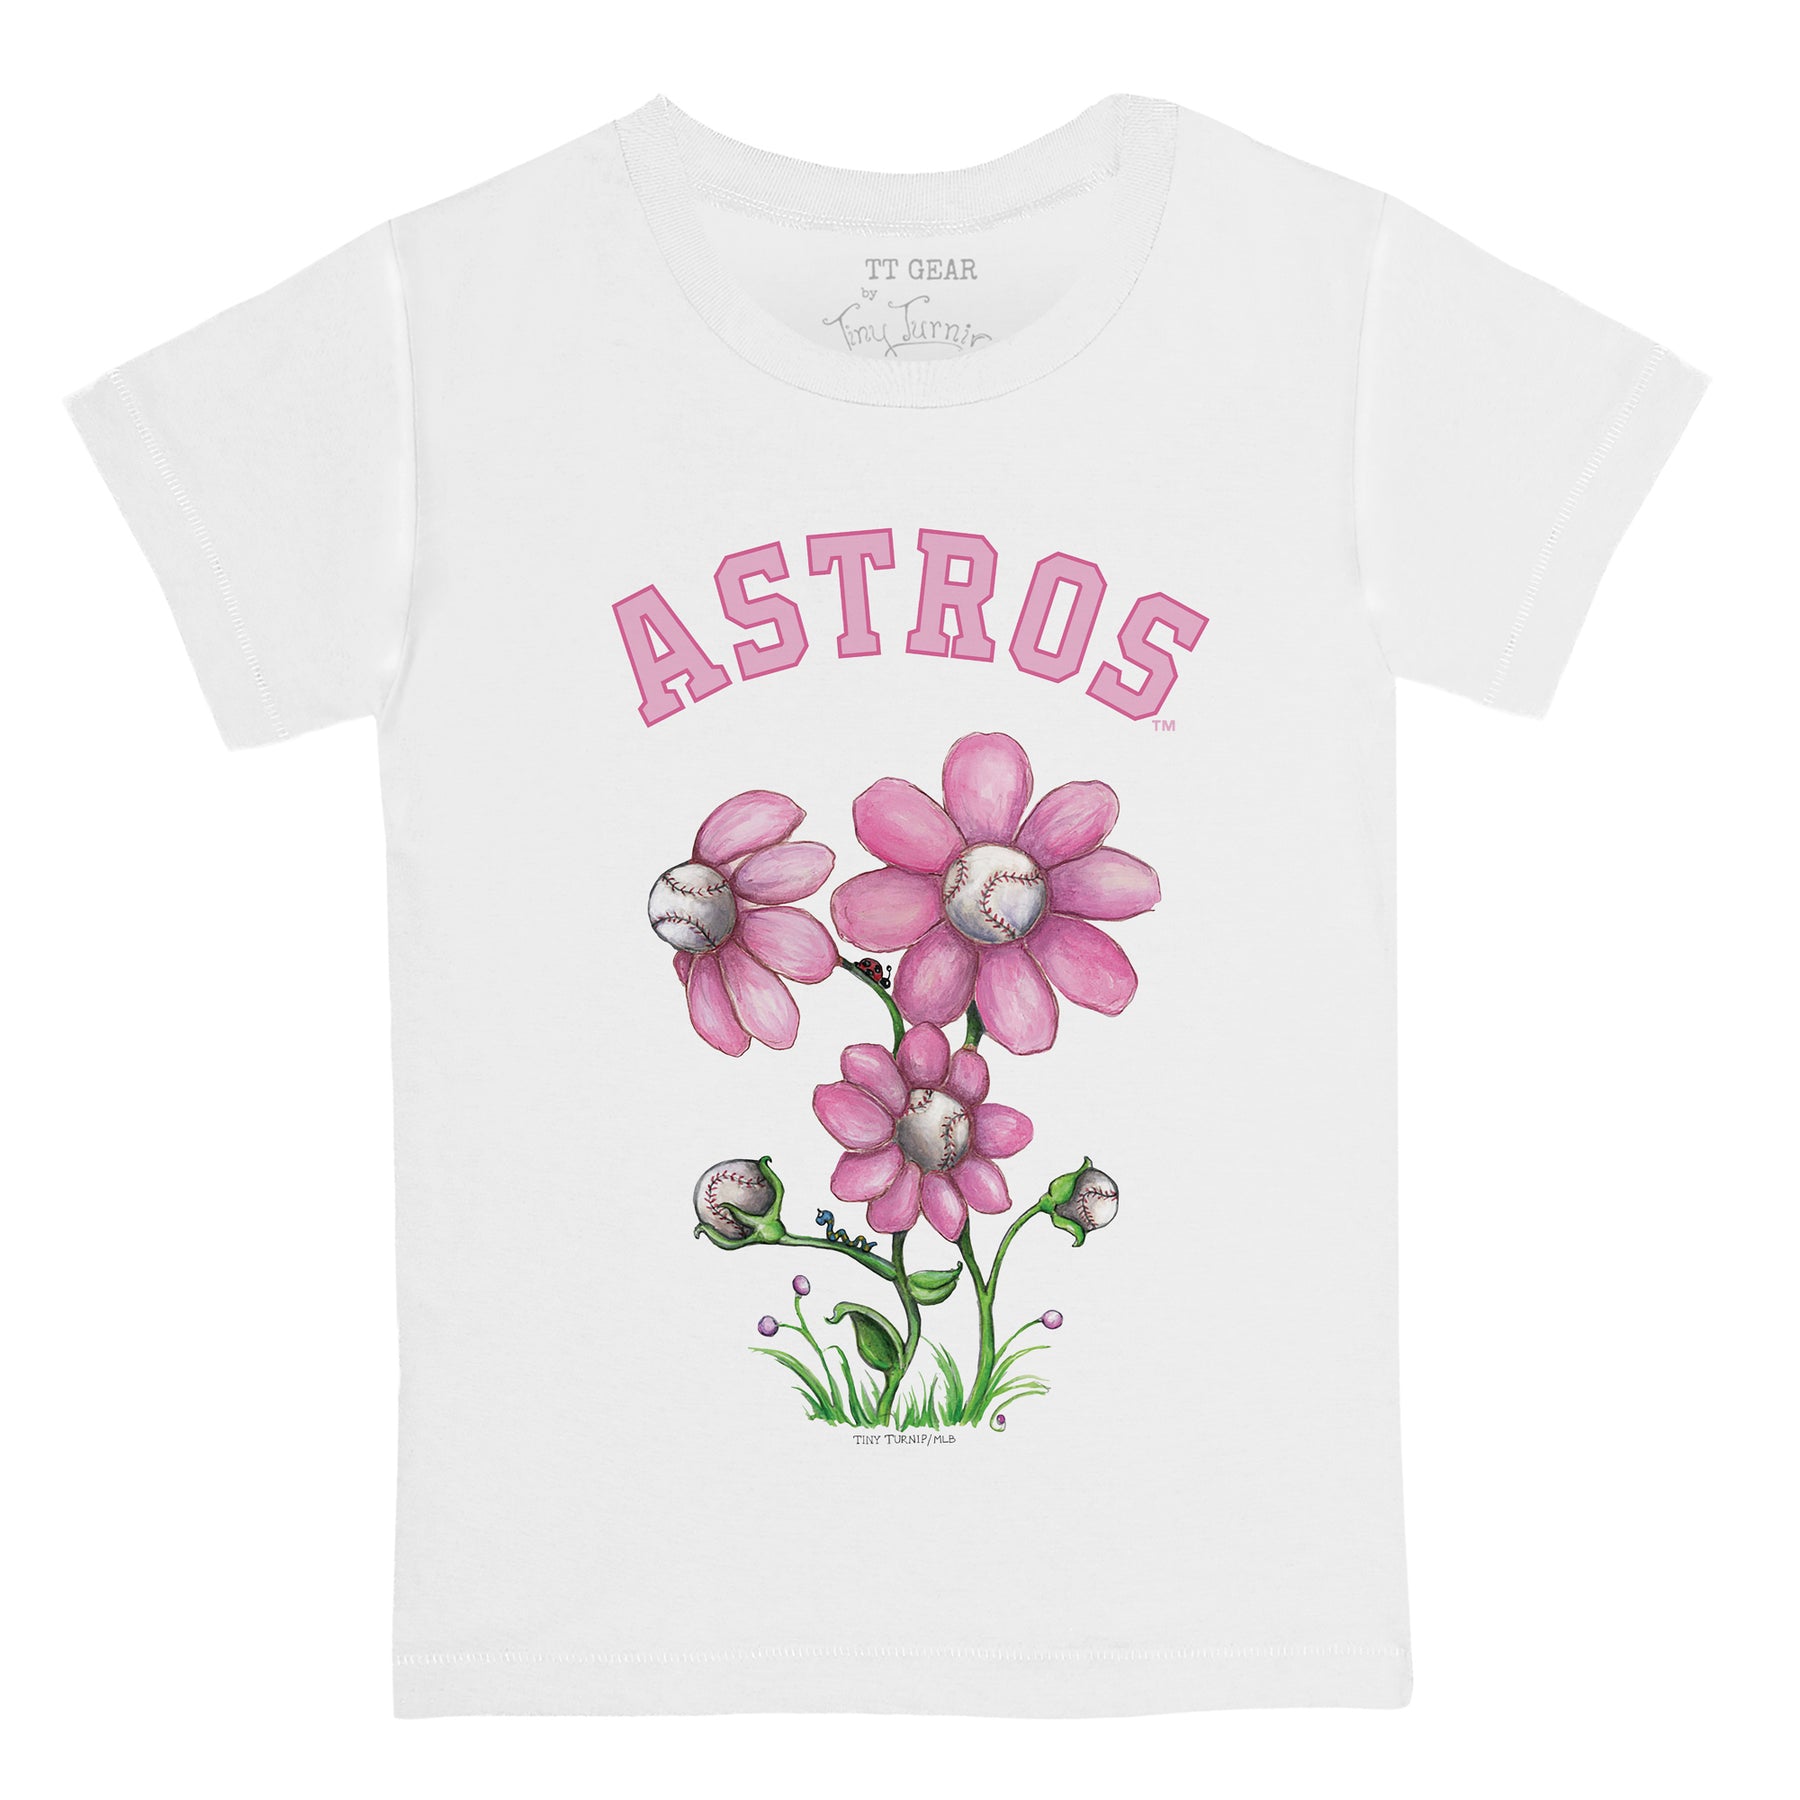 Houston Astros Tiny Turnip Toddler Heart Bat T-Shirt - Navy